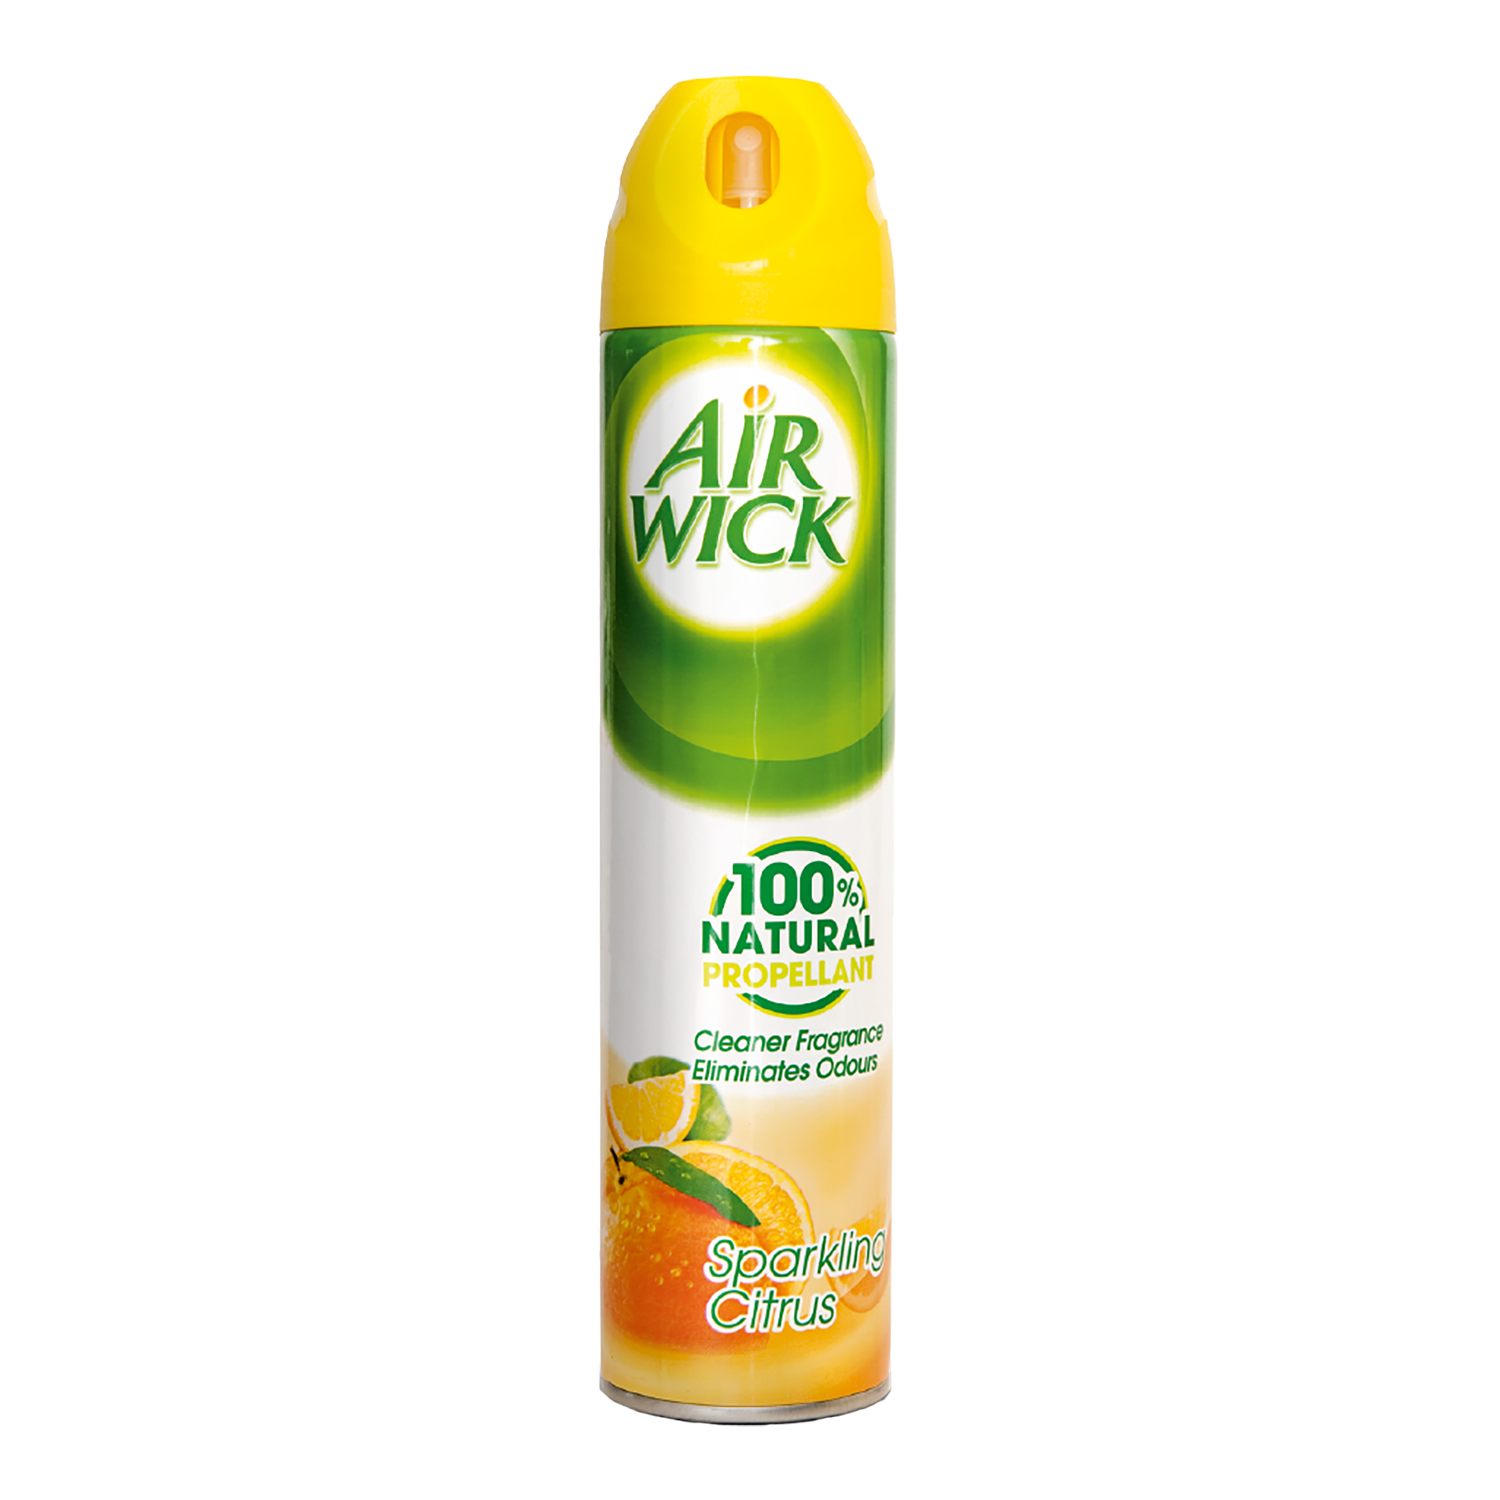 Air Wick (Areosol) Sparkling Citrus